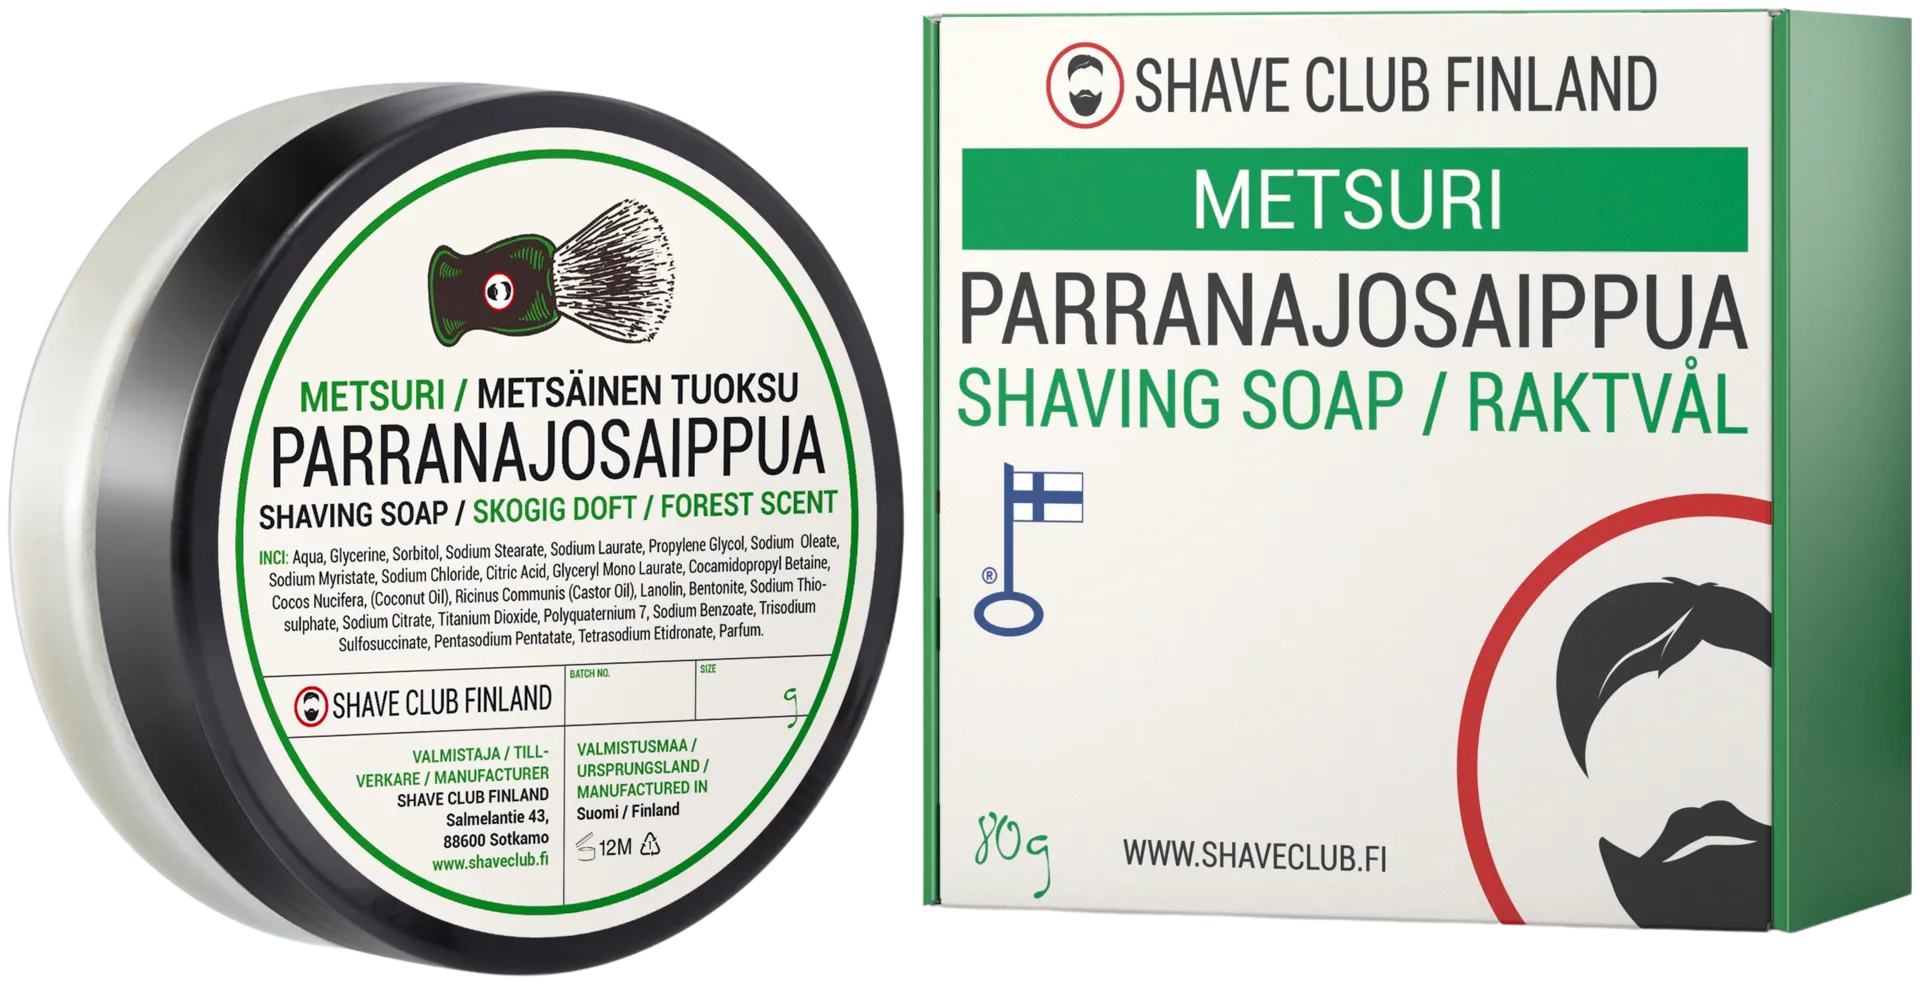 Shave Club Finland parranajosaippua metsuri 80ml